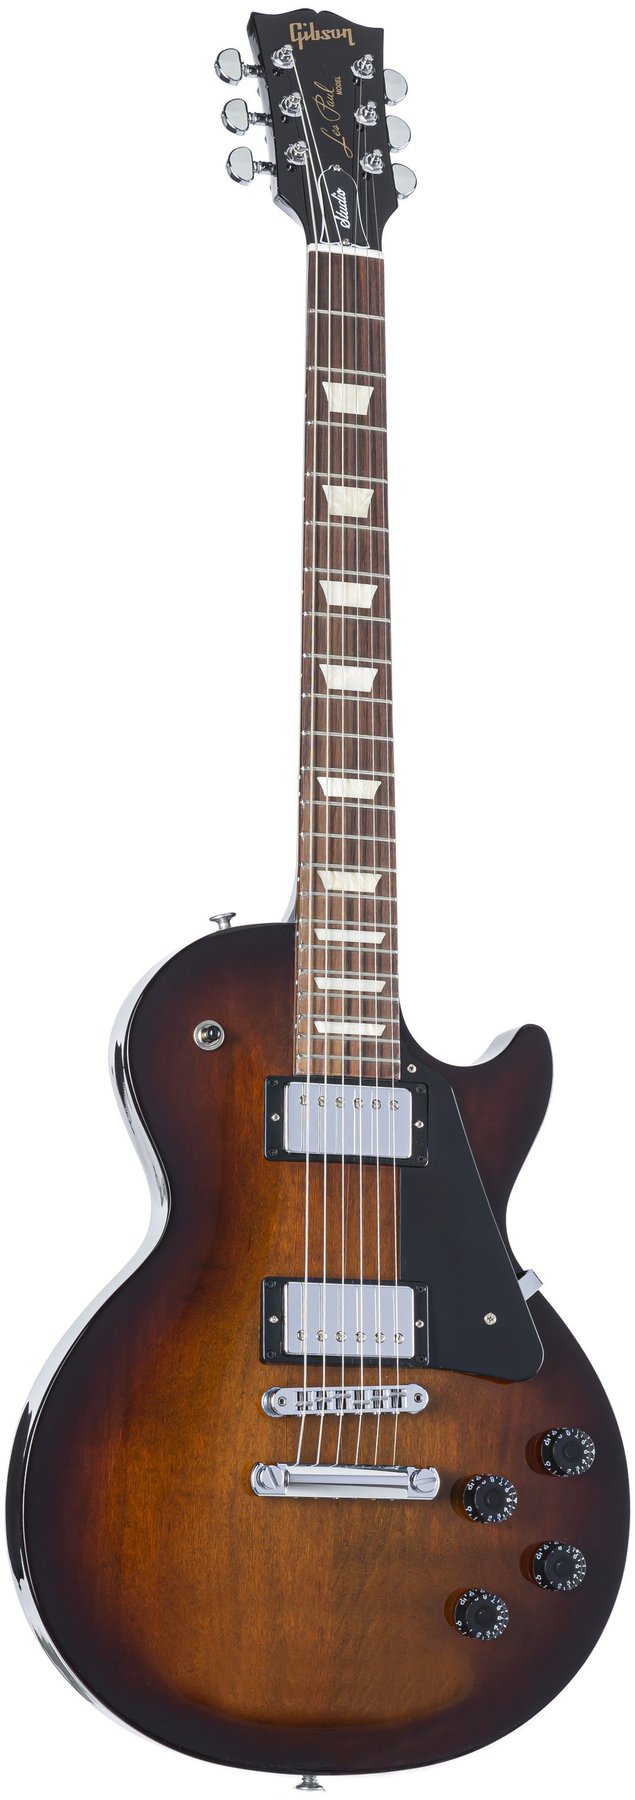 Gibson Les Paul Studio 2019 ab ,03 € im Preisvergleich kaufen